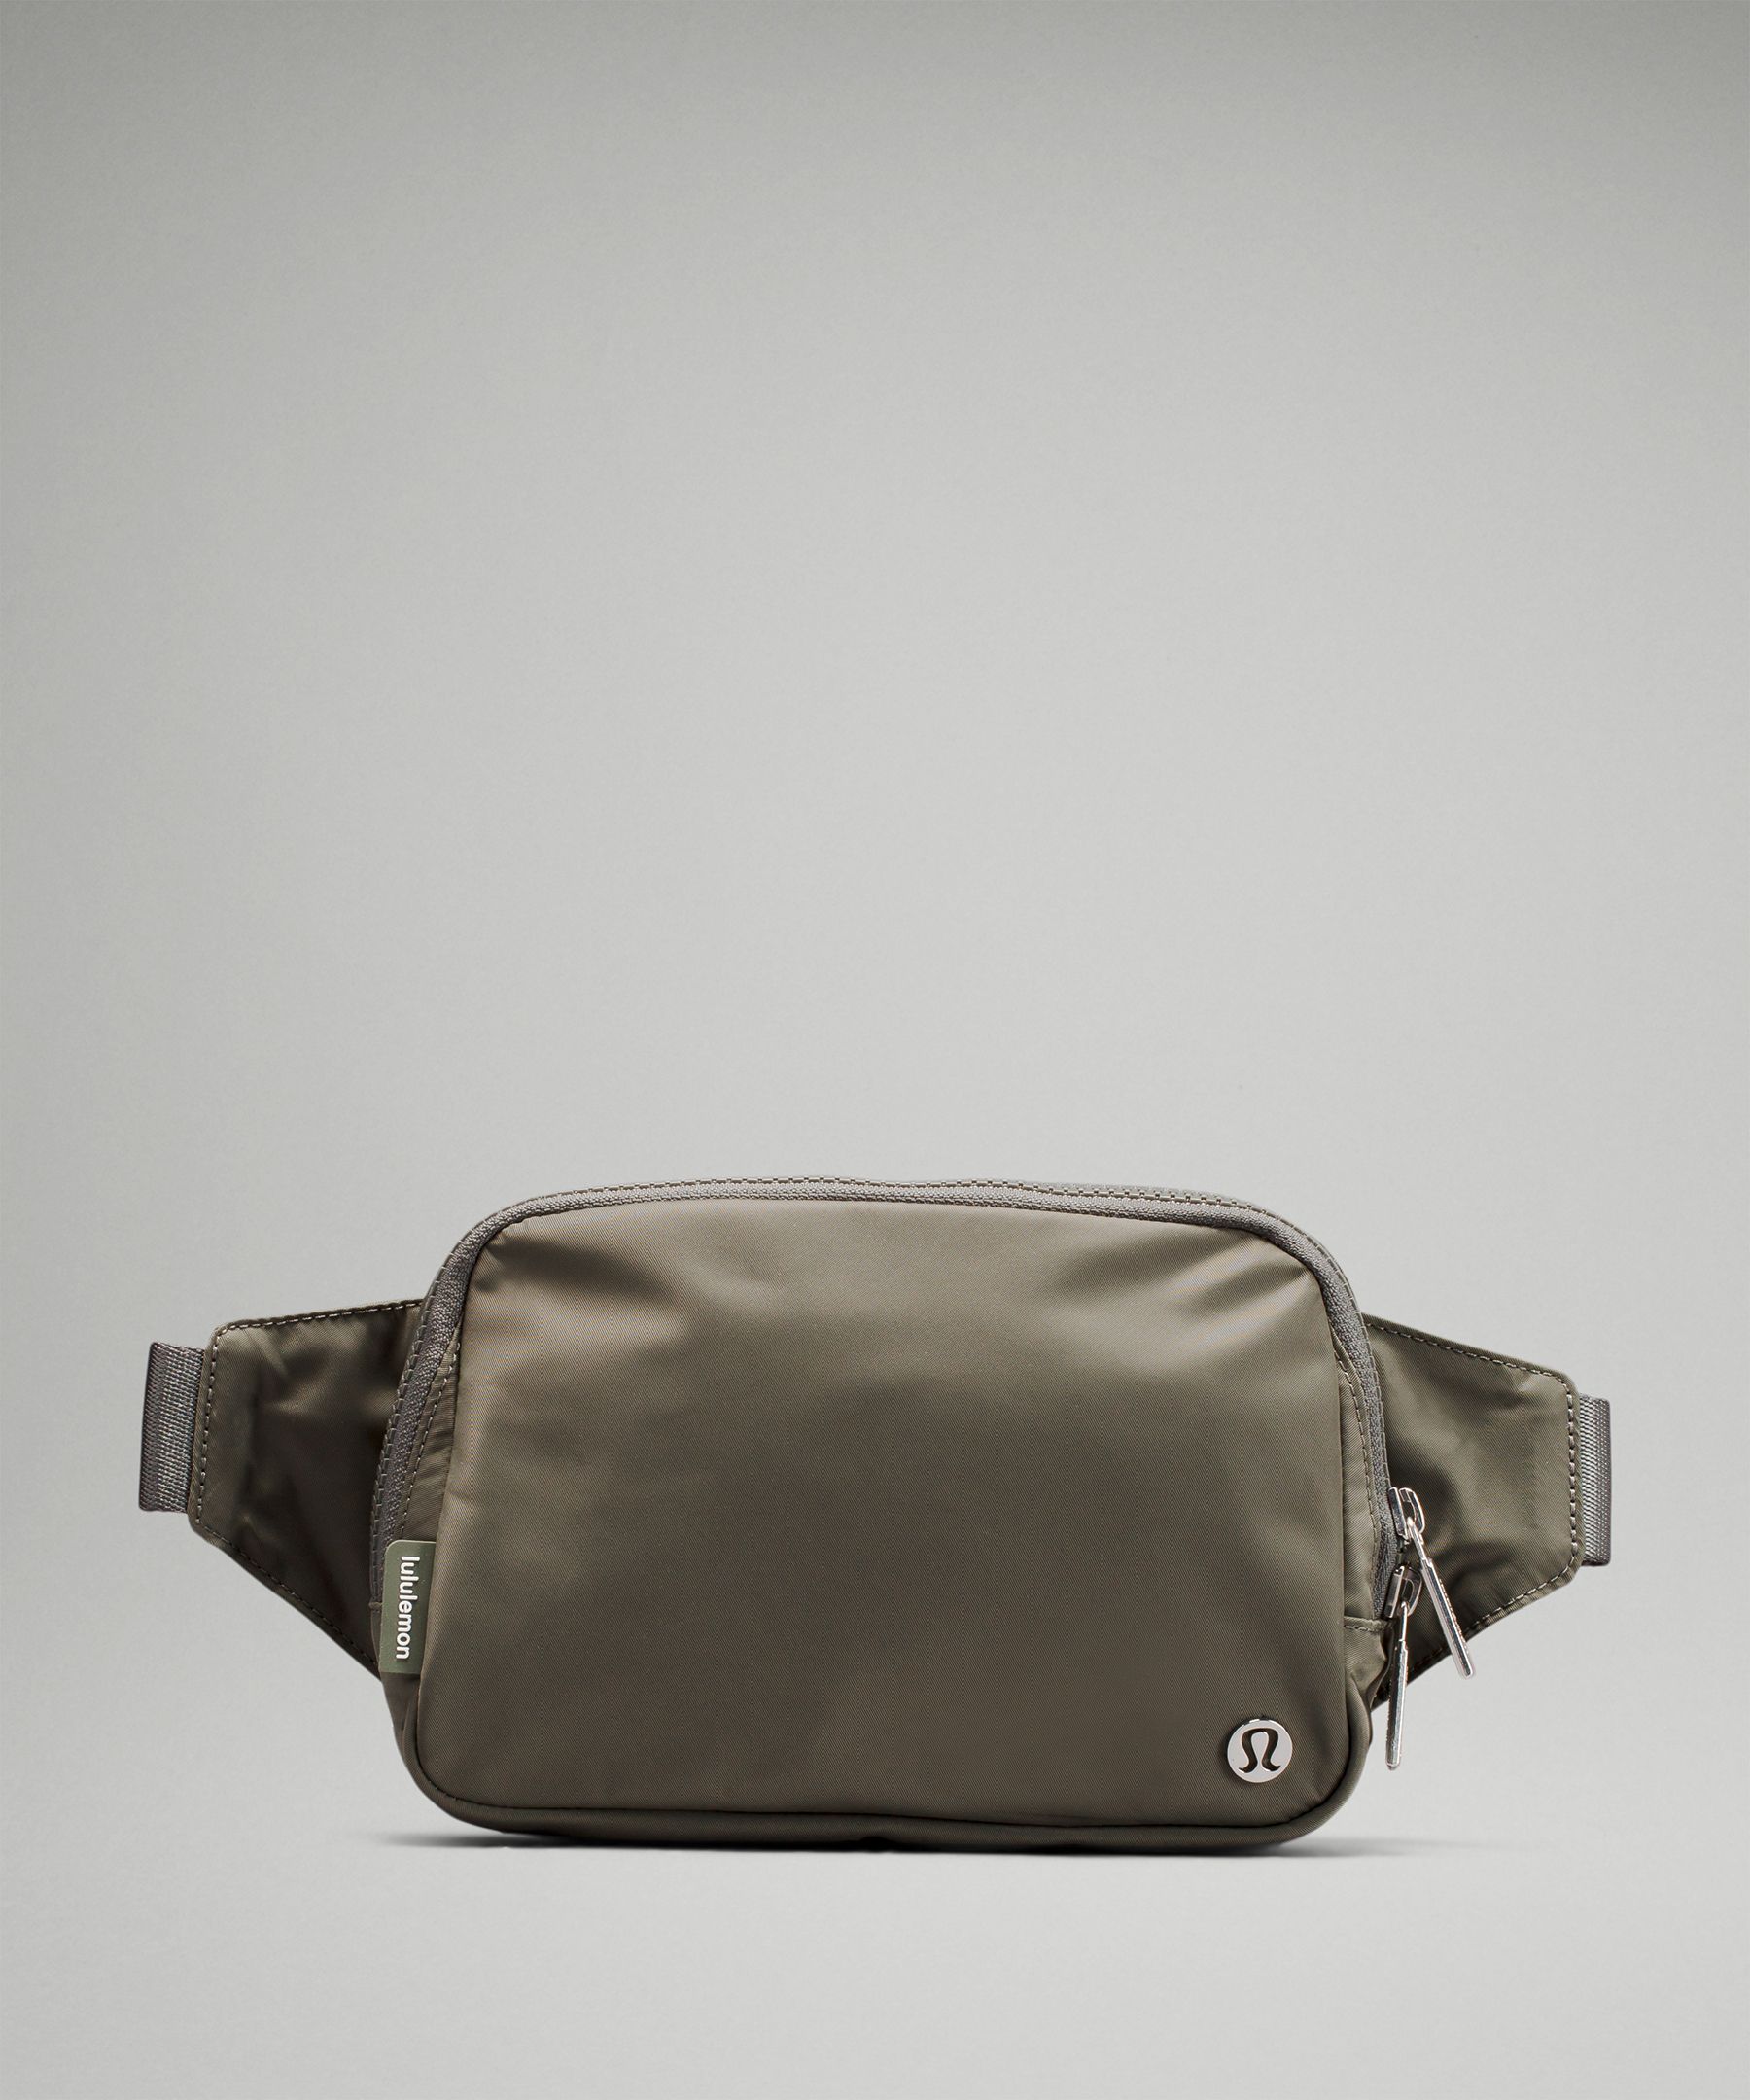 Lululemon Everywhere Belt Bag Black Adjustable Crossbody Purse Authentic  NEW